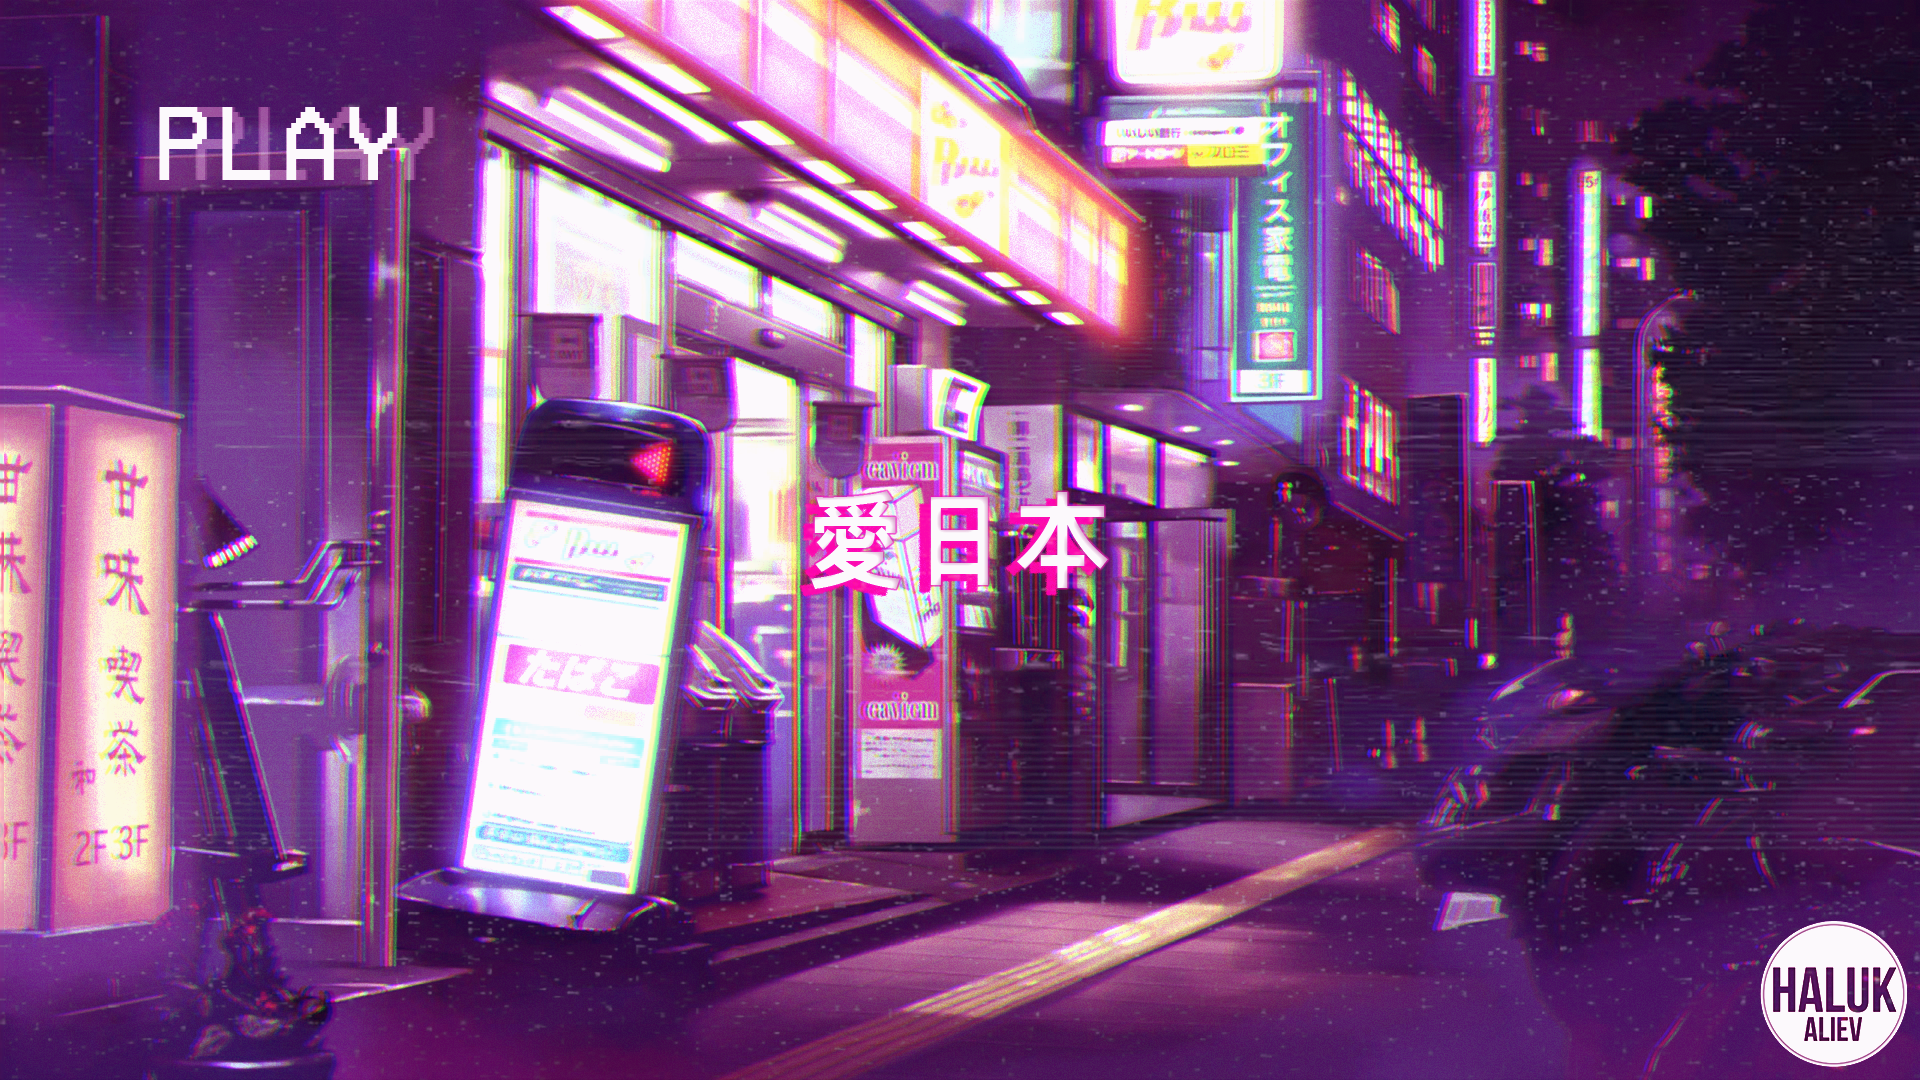 Anime Street Vaporwave by HalukAliev on DeviantArt